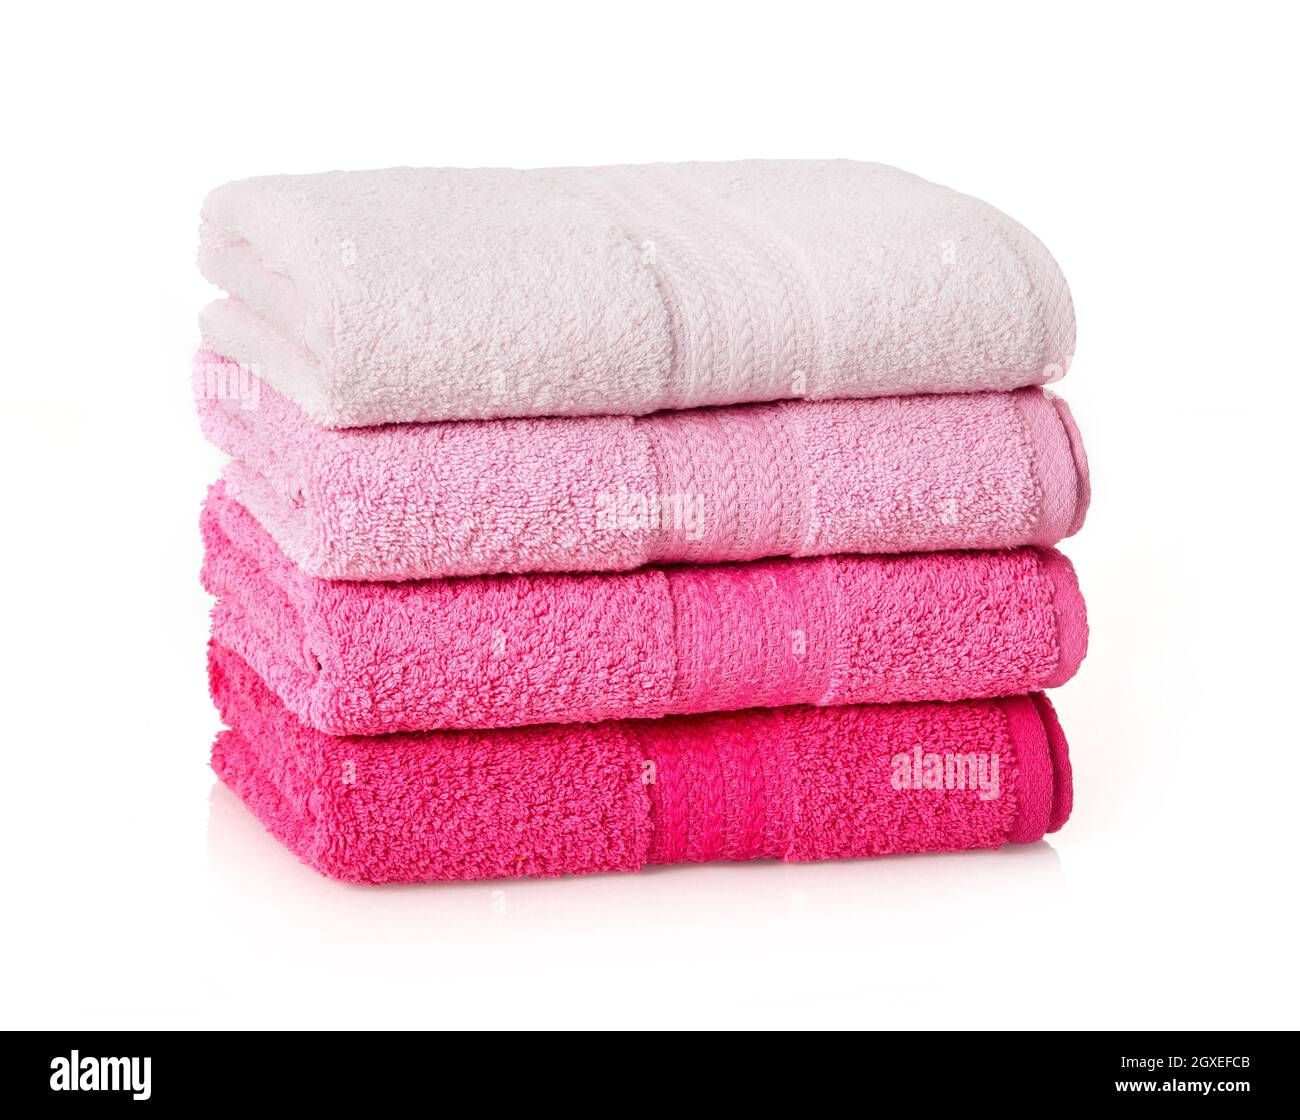 https://c8.alamy.com/comp/2GXEFCB/pink-towels-stack-on-white-background-2GXEFCB.jpg